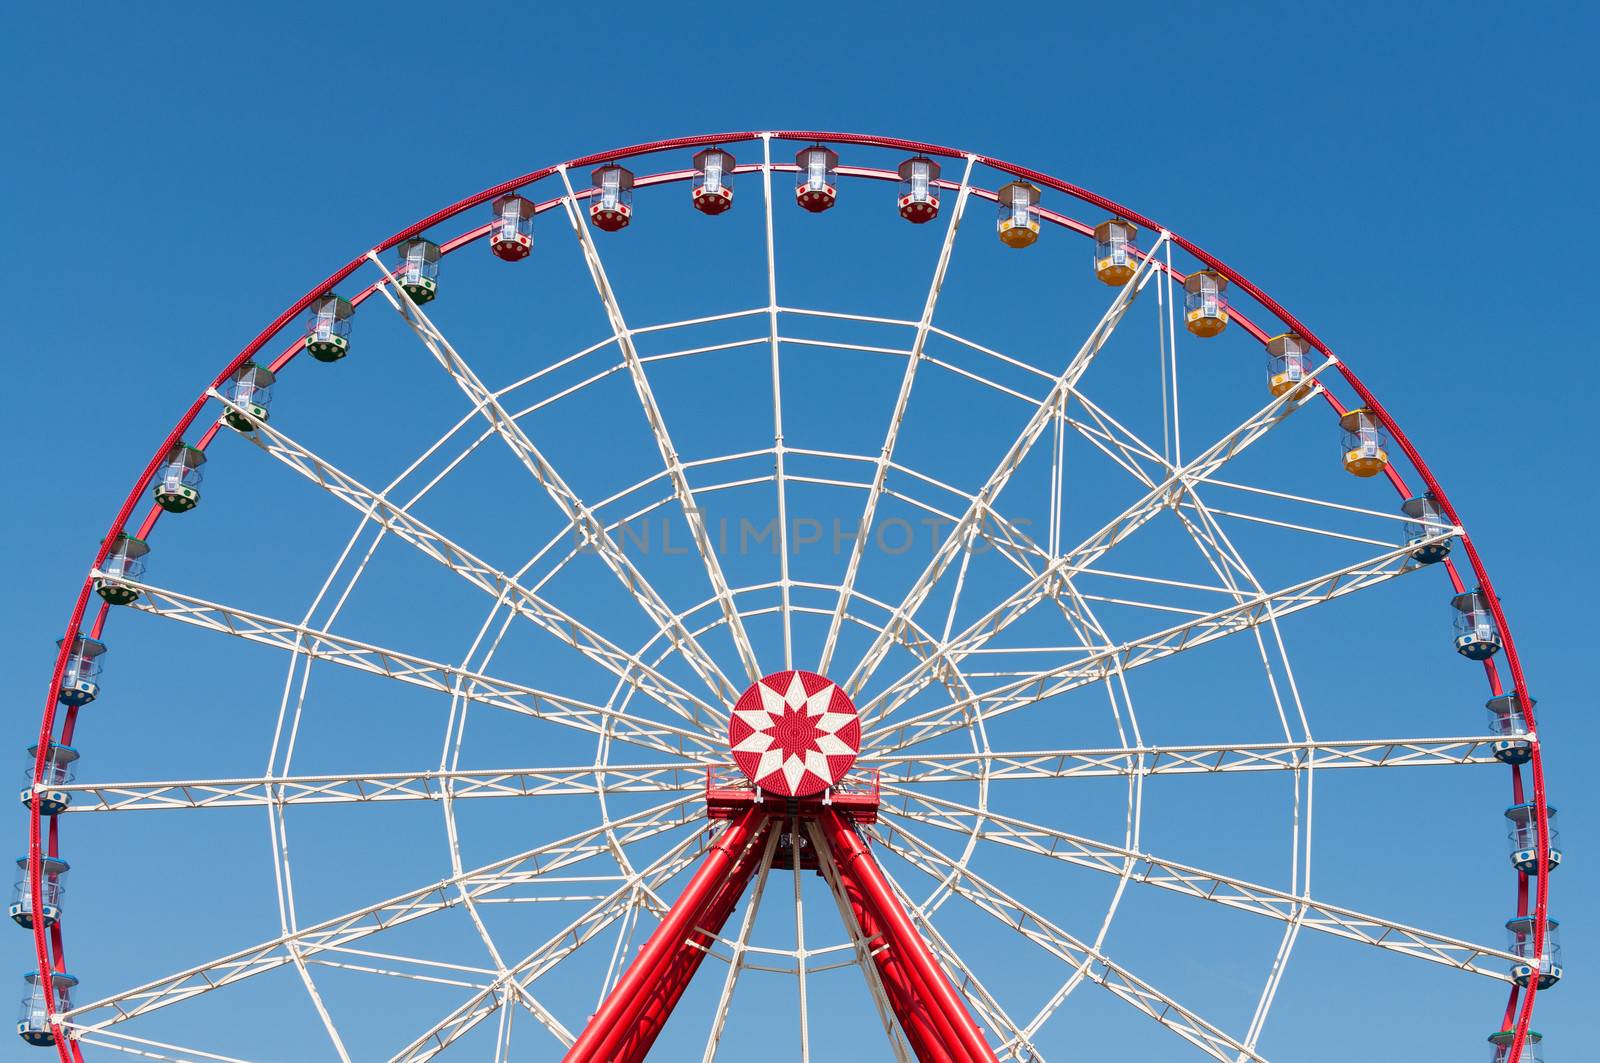 Big ferris wheel on blue sky background.